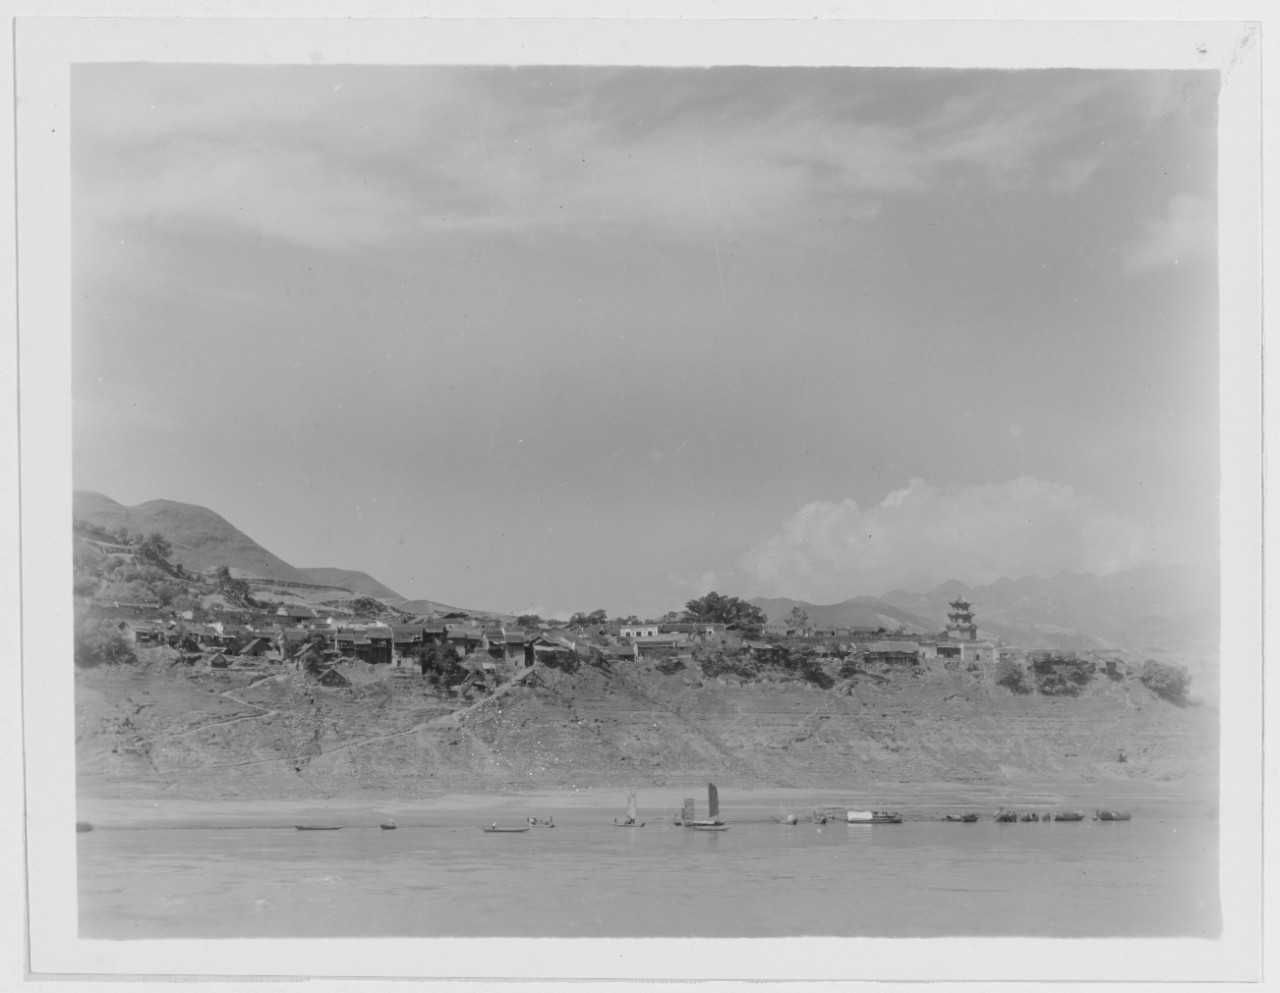 Upper Yangtze River, China. 1934